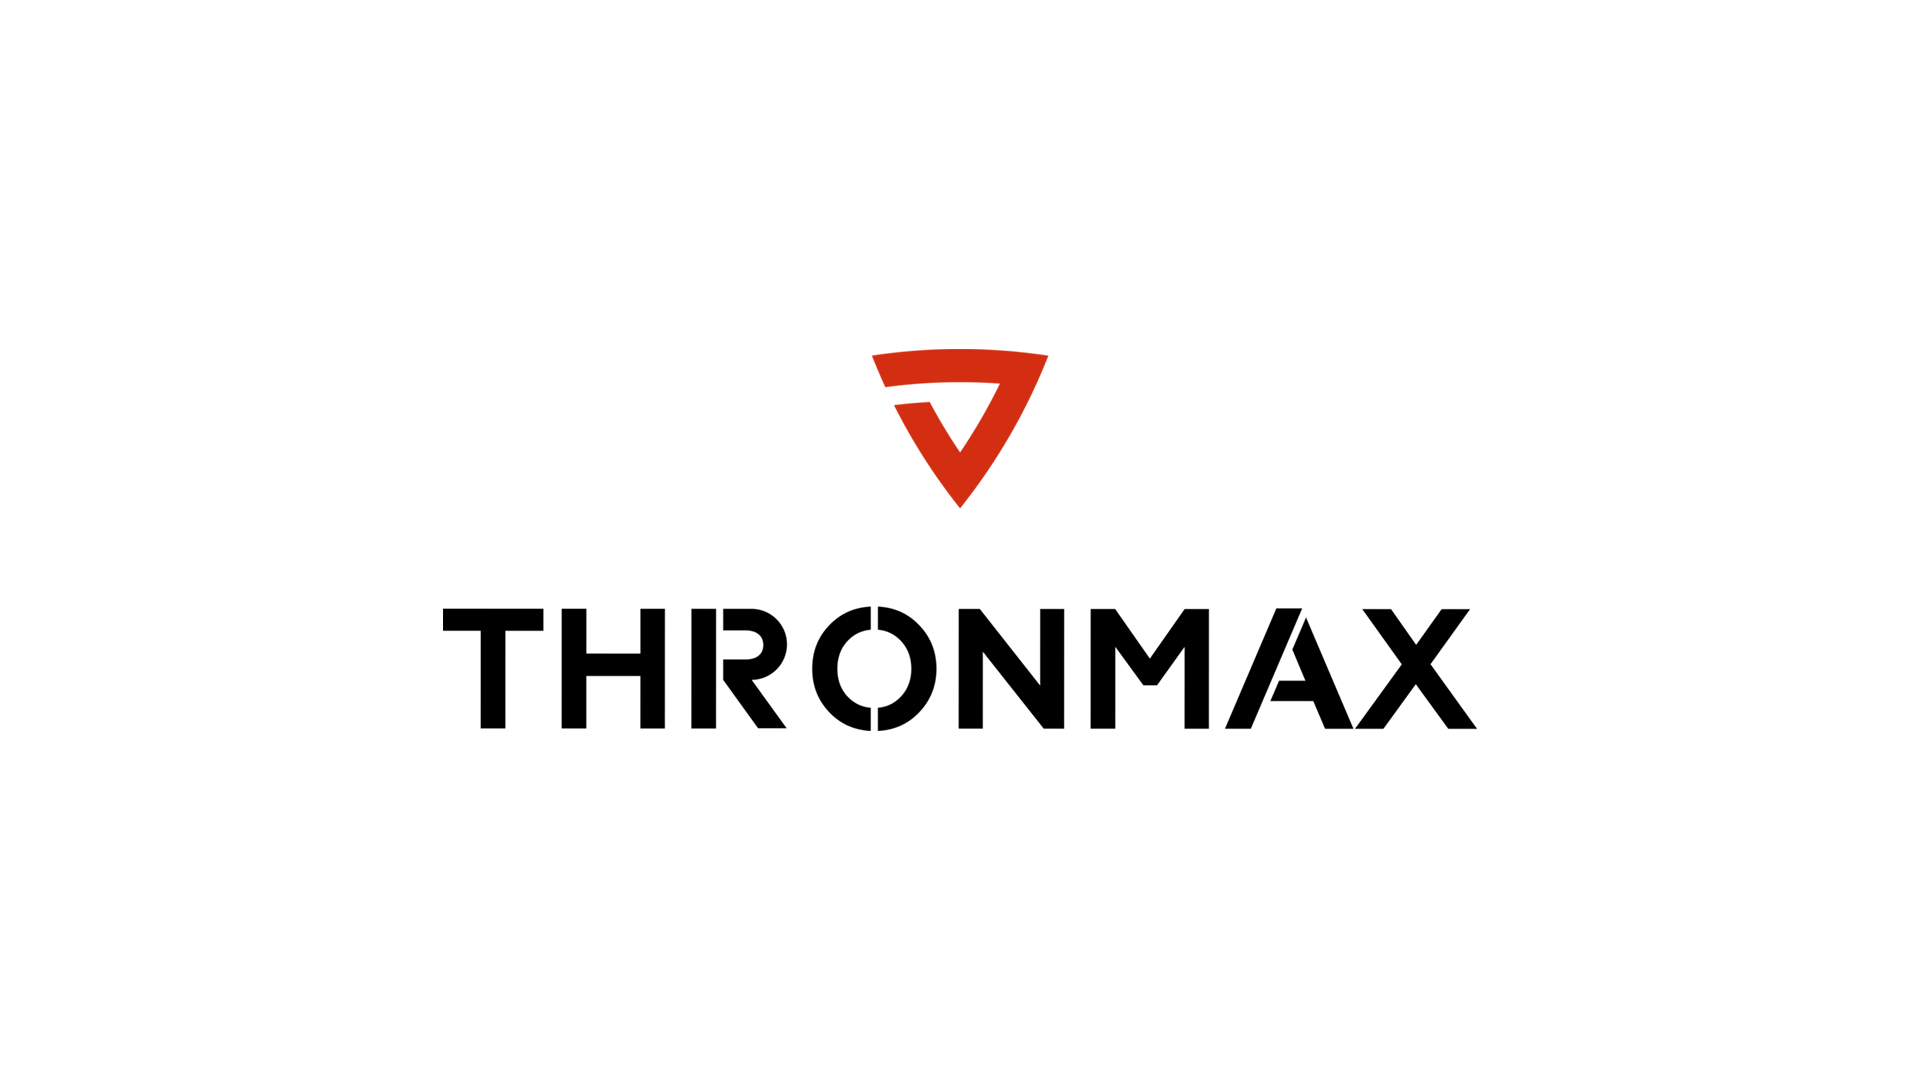 CMS/Thronmax Partnership